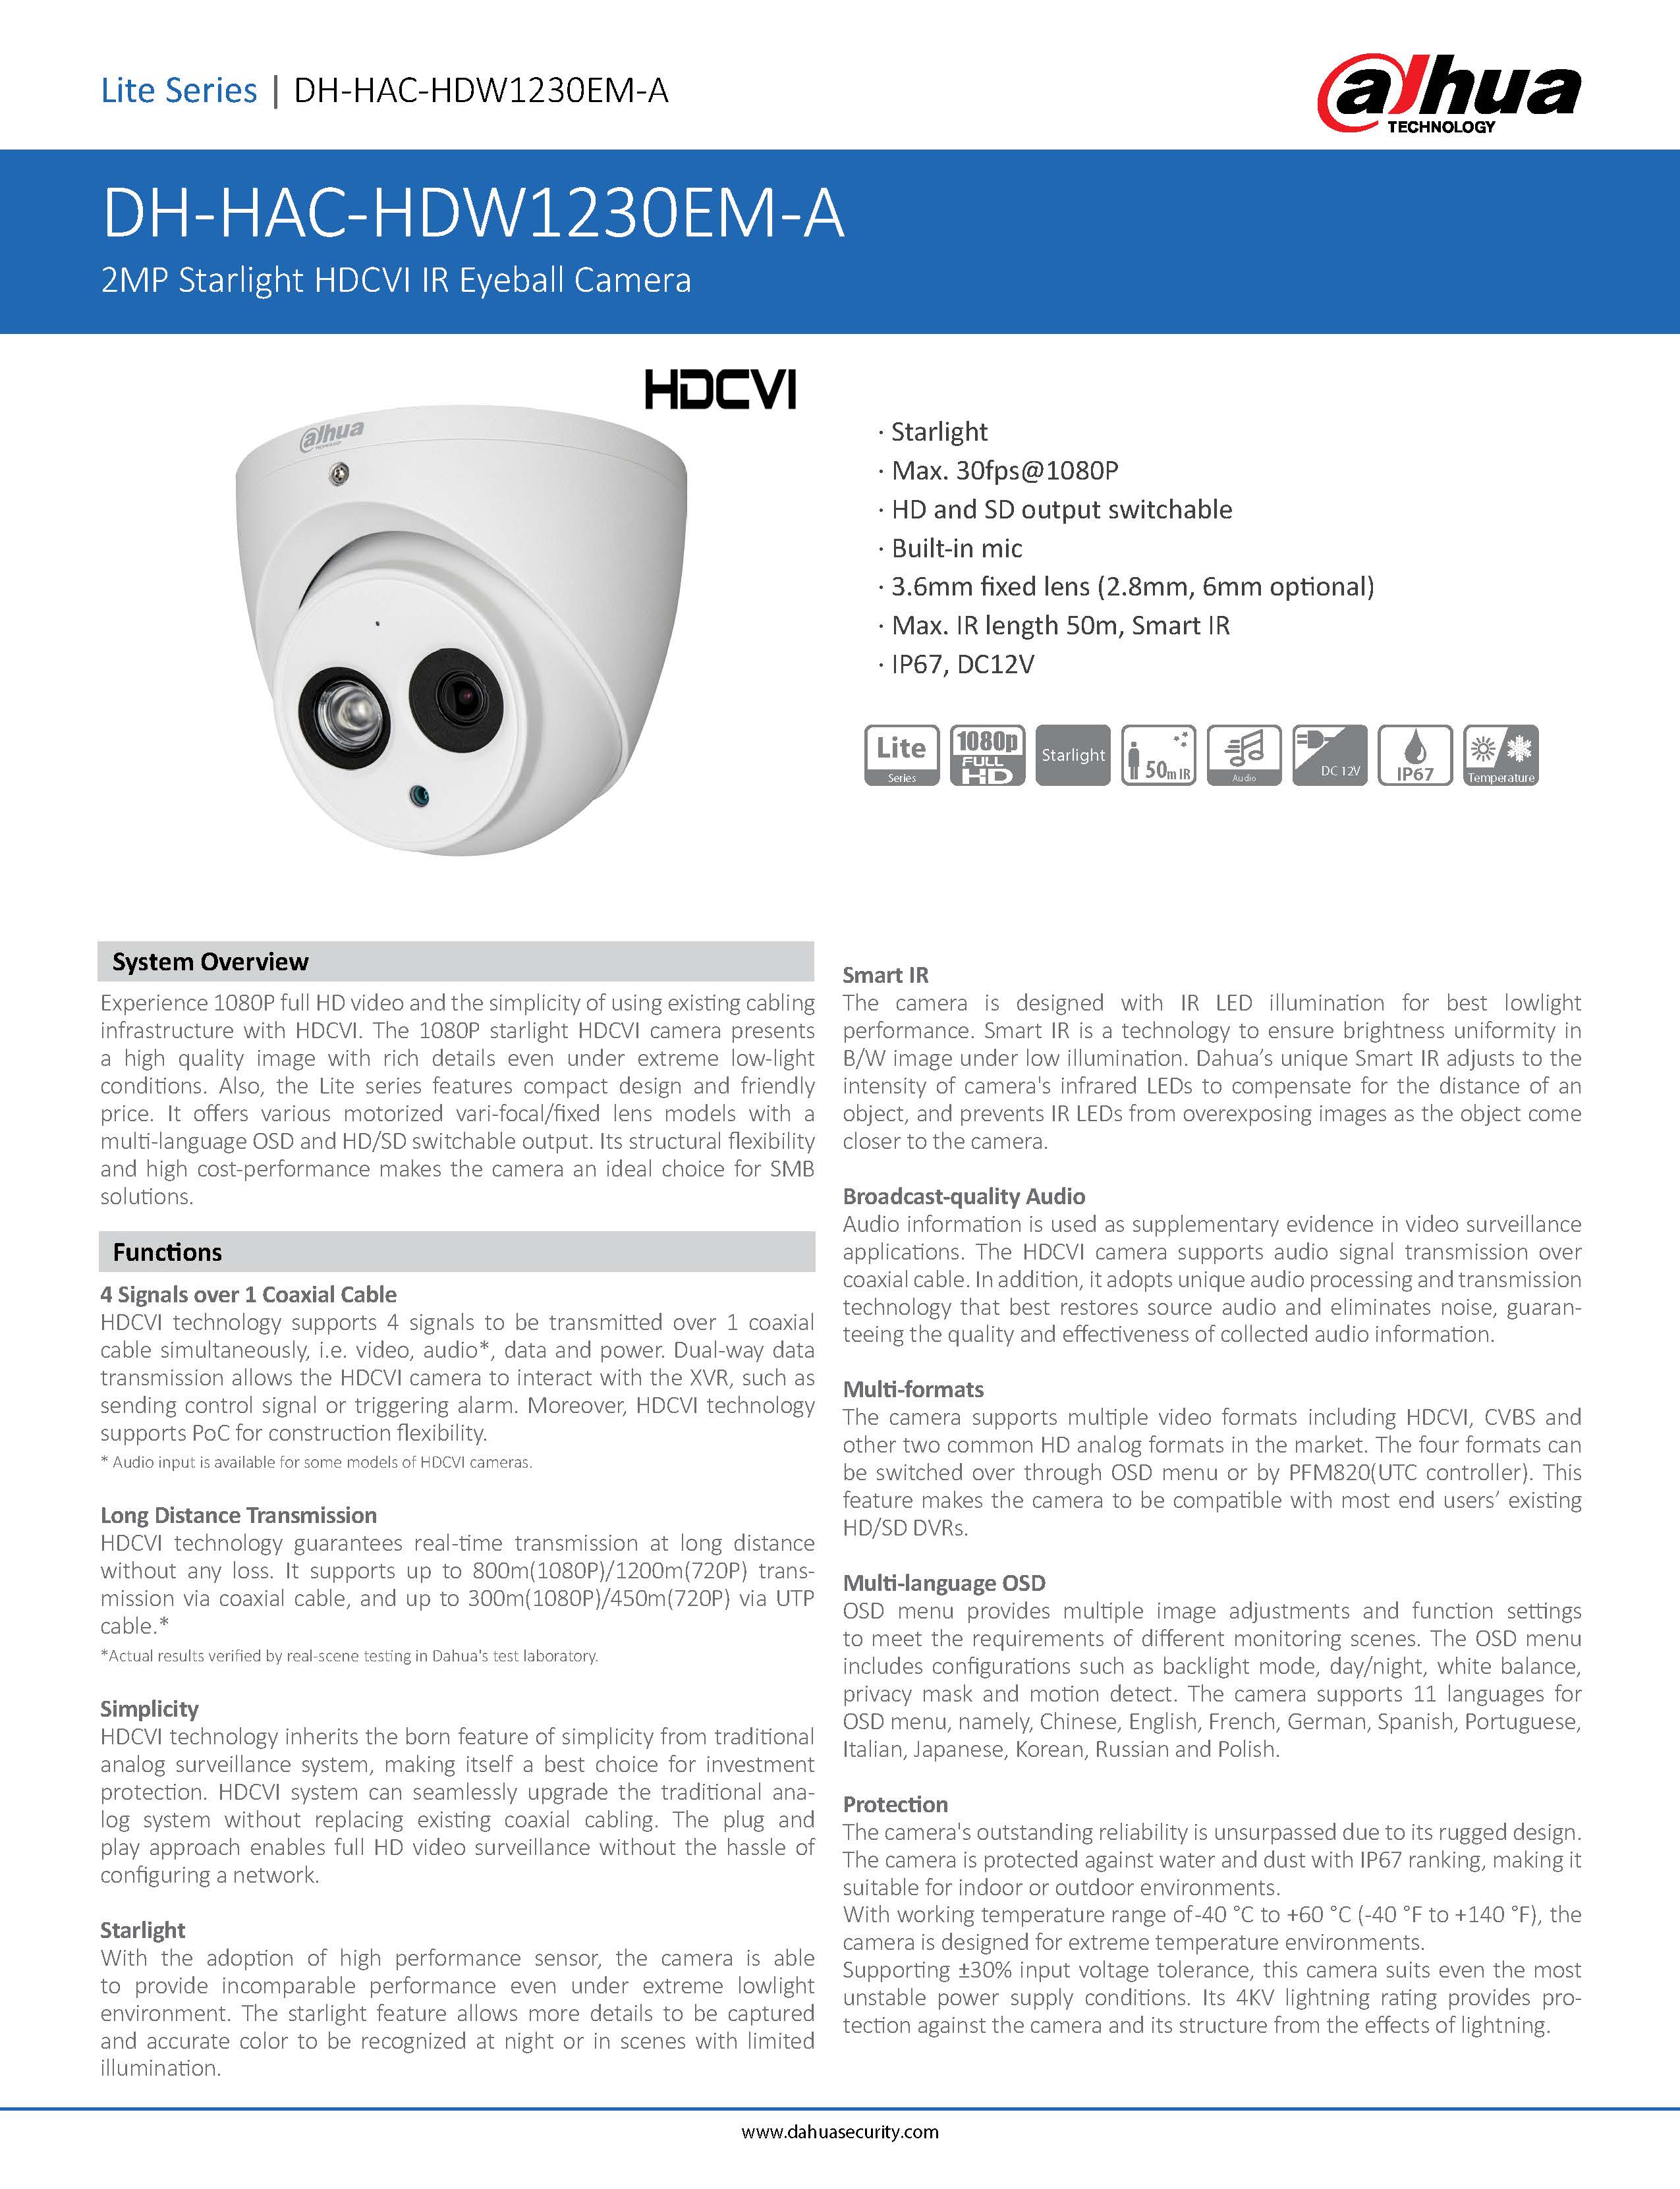 Dahua HAC-HDW1230EMP-A Spec 01